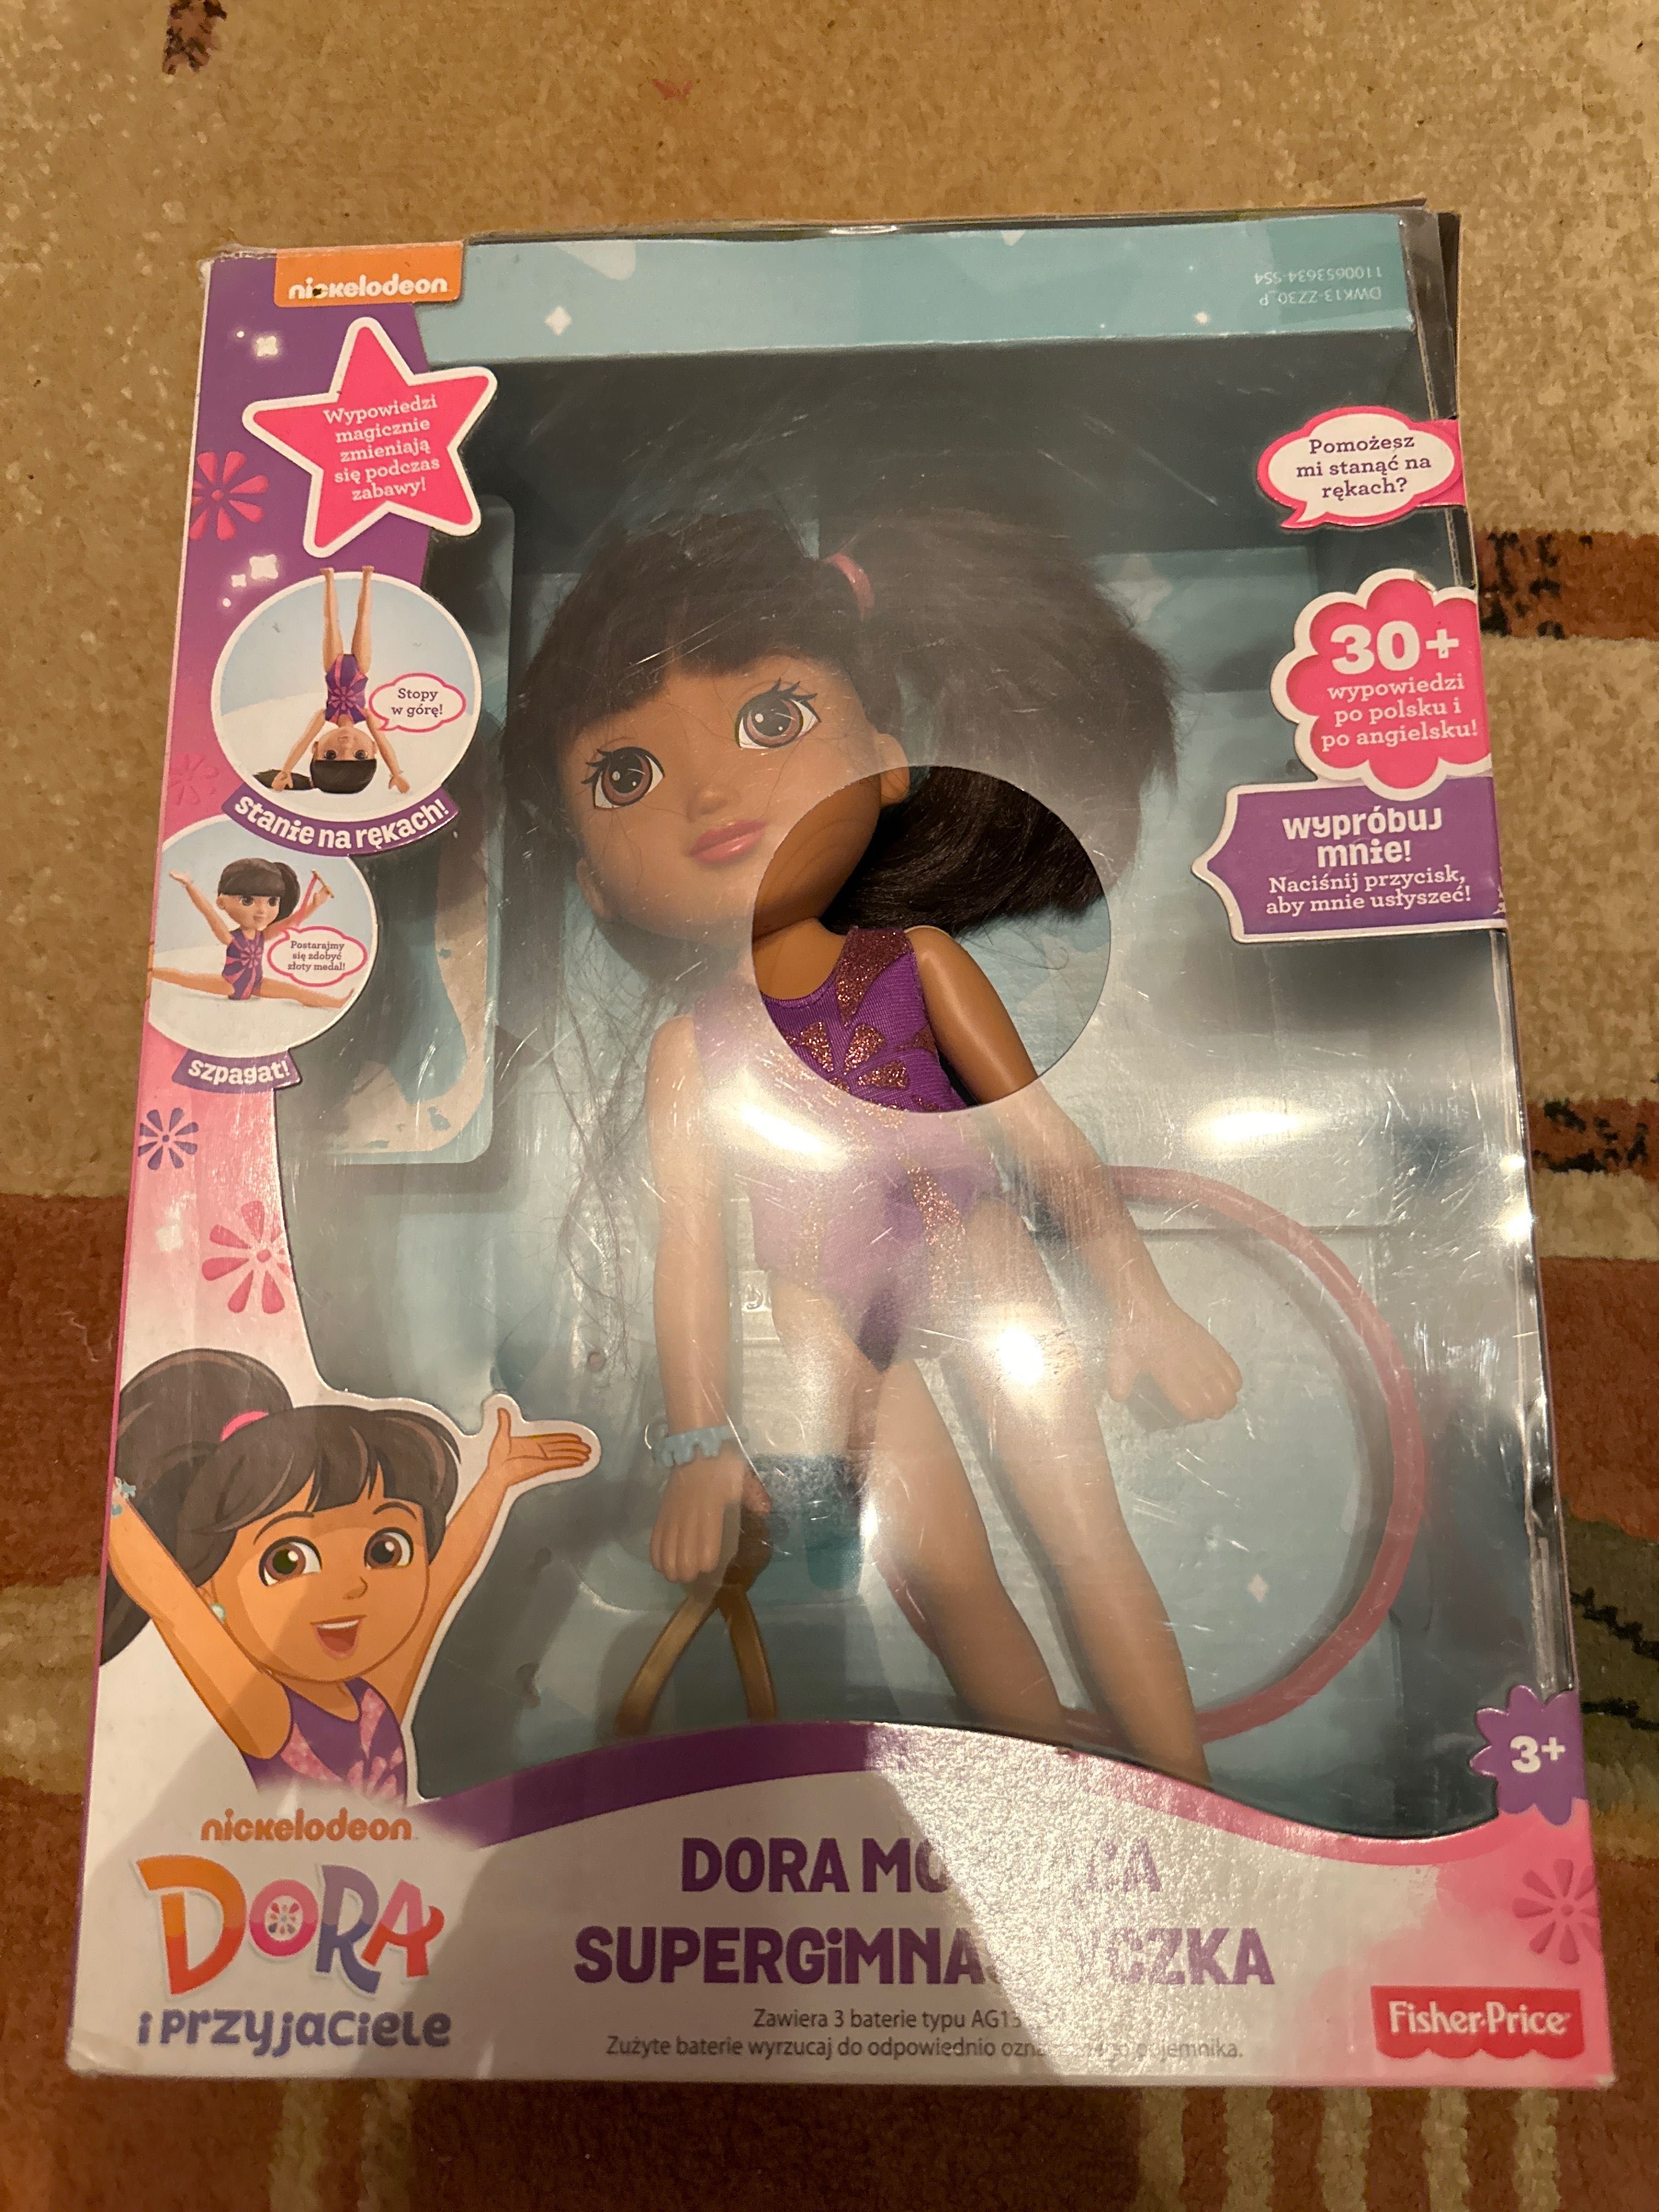 Super zabawa Dora mówiąca supergimnastyczka